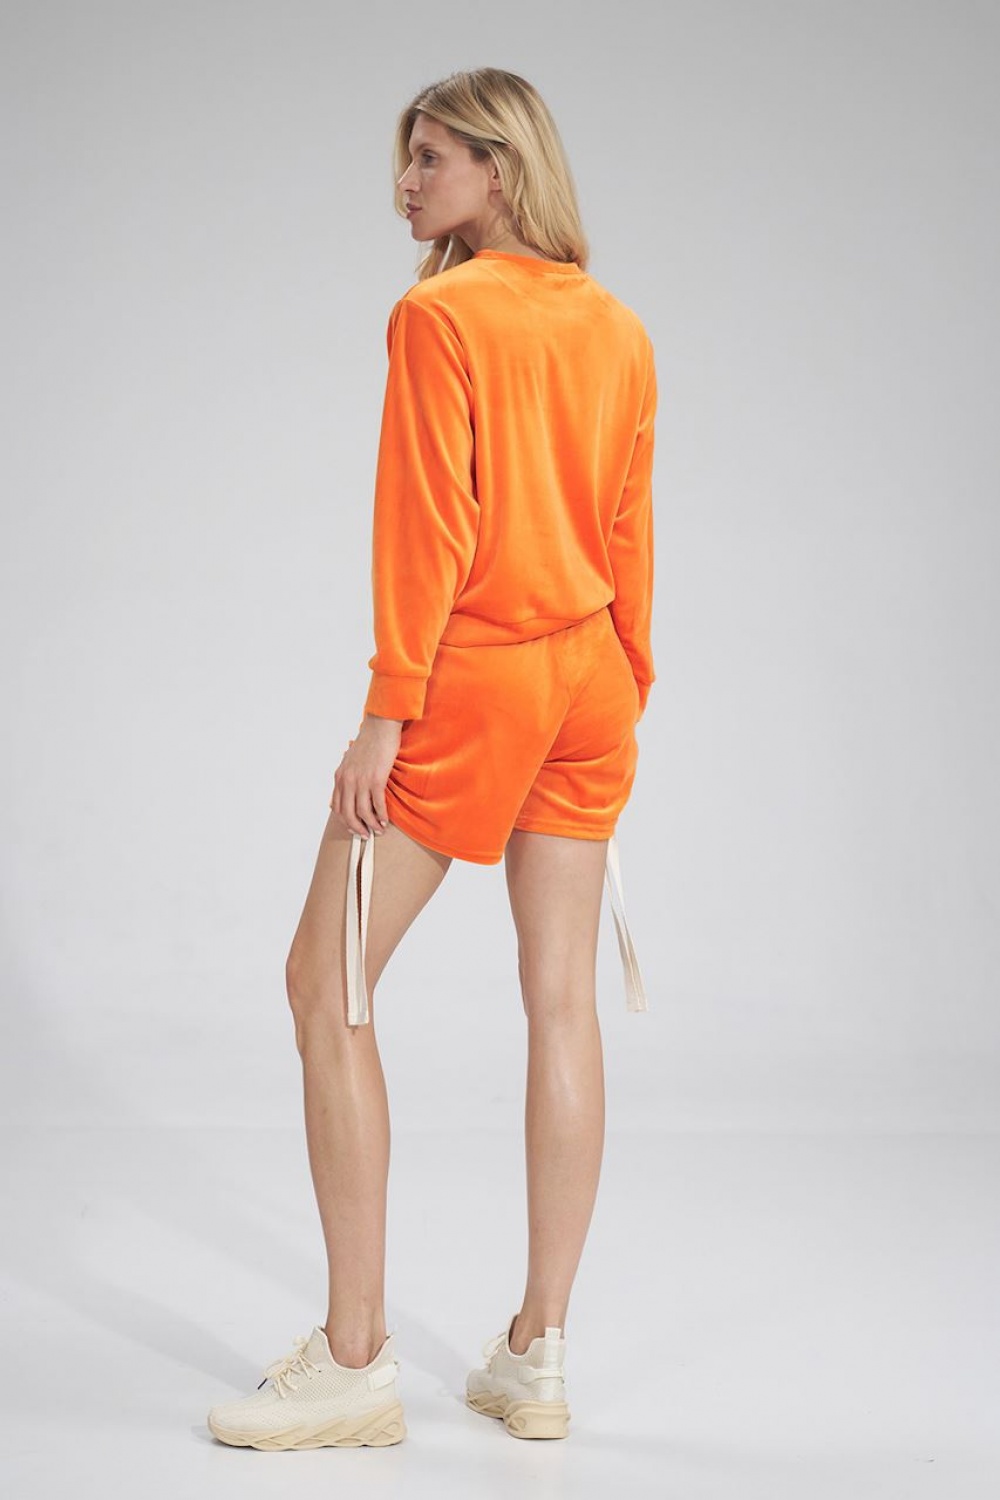 Sweater model 154668 Figl orange Damen